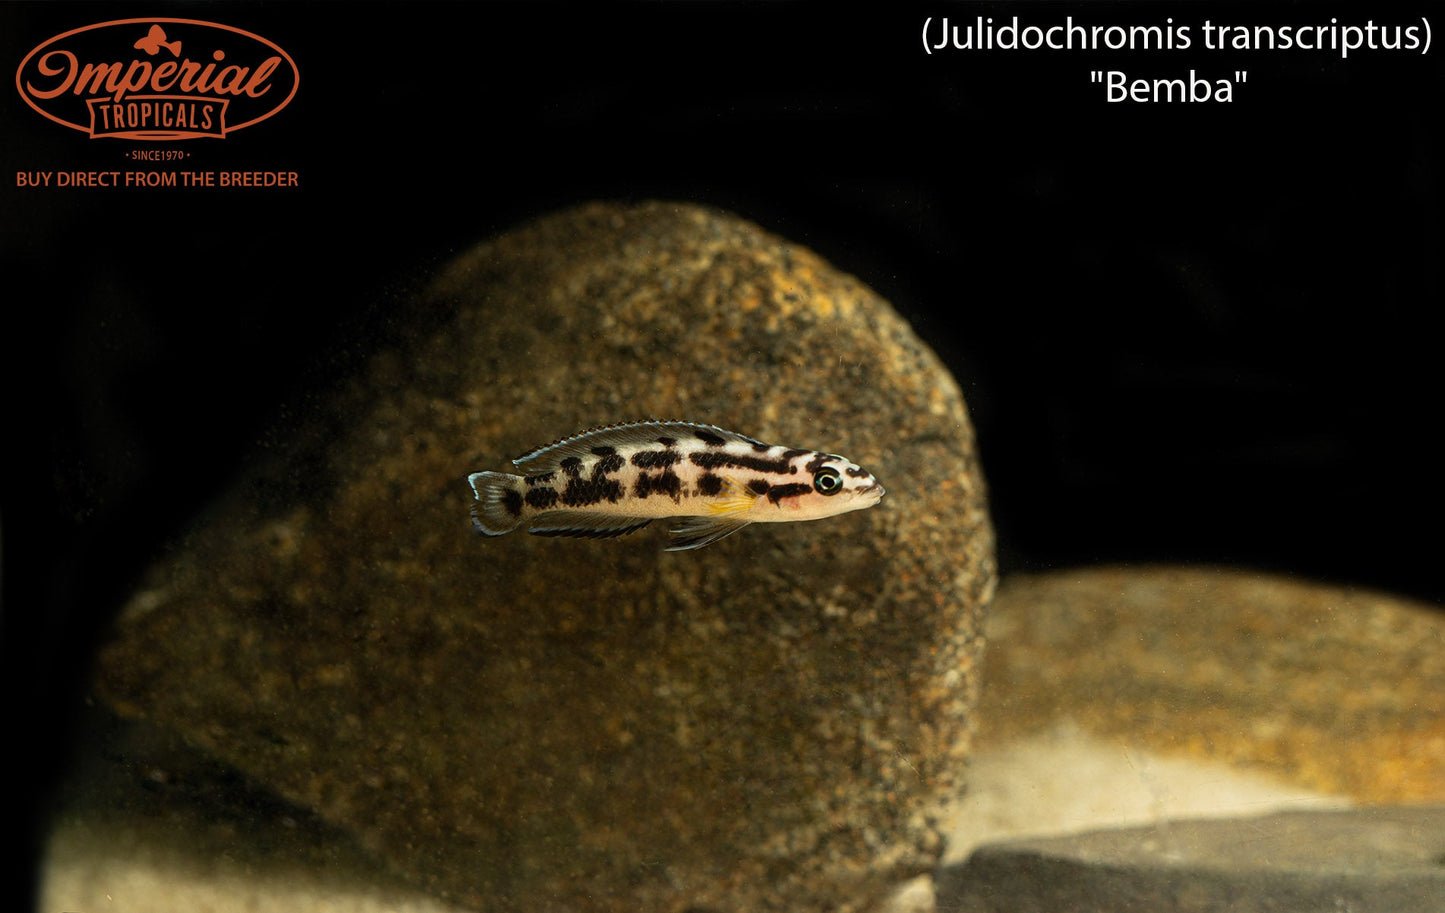 Julidochromis transcriptus "Bemba"